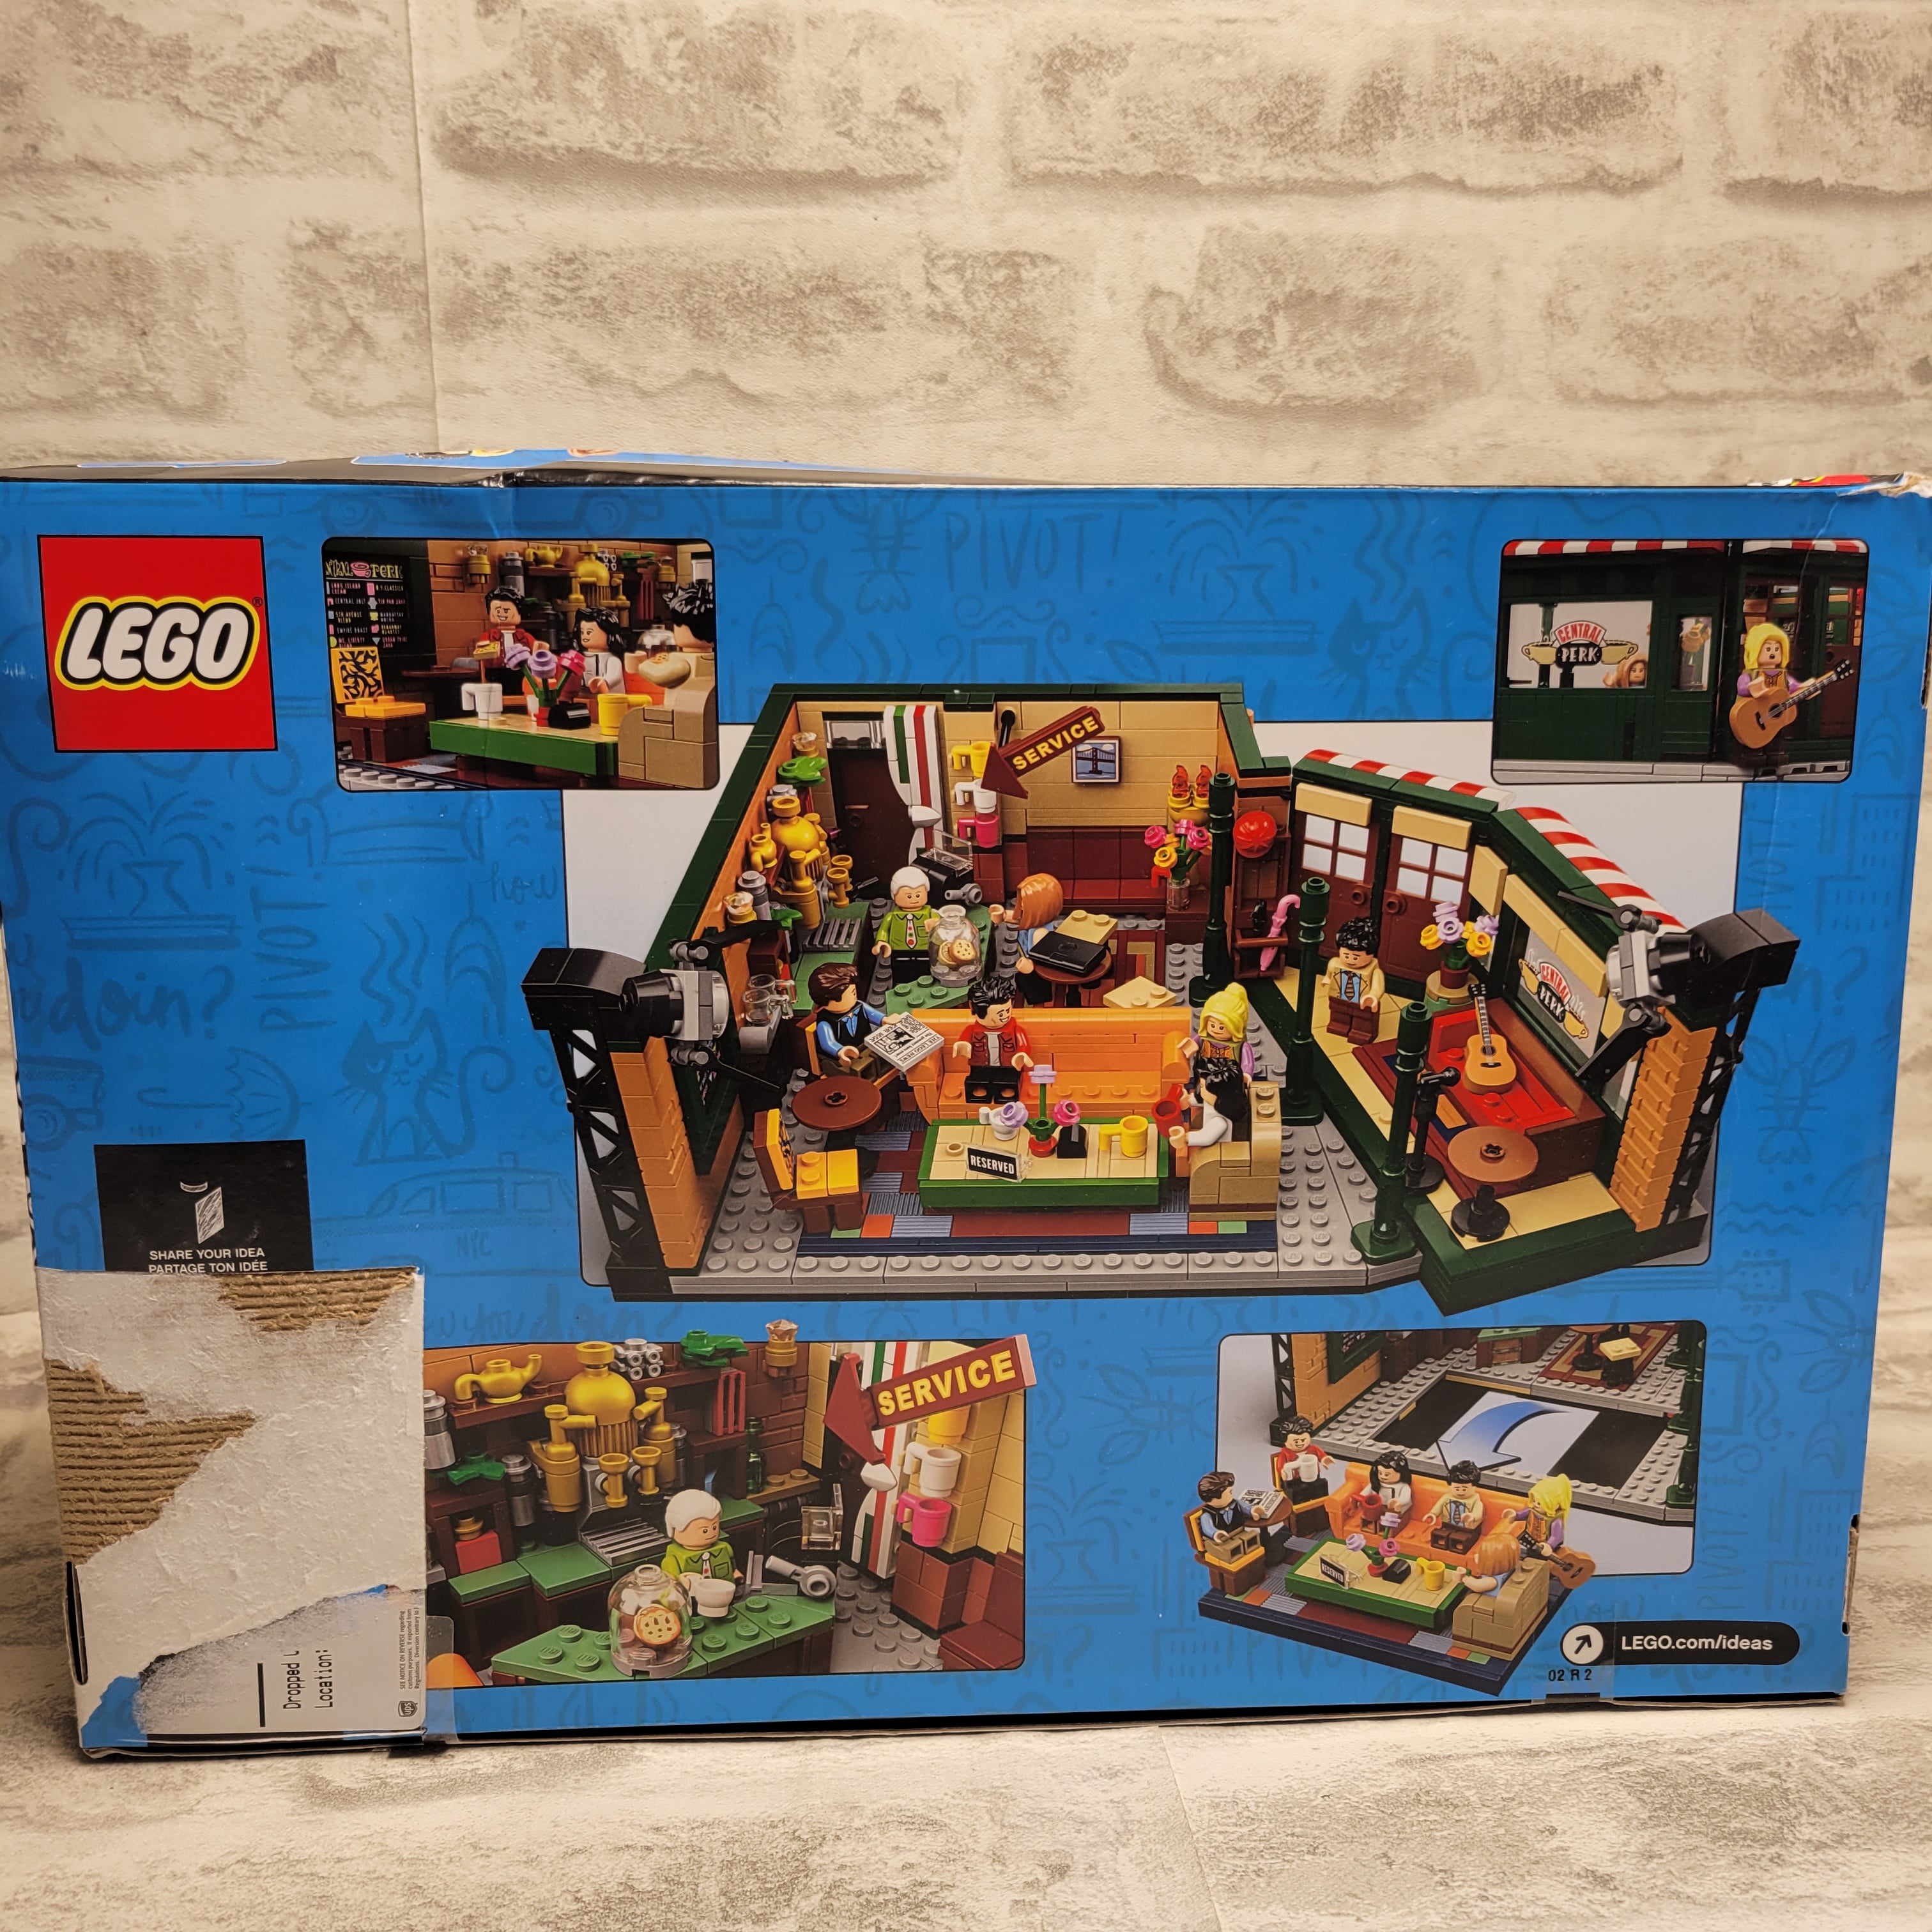 LEGO Ideas 21319 Central Perk Building Kit (1,070 Pieces) (7859694043374)